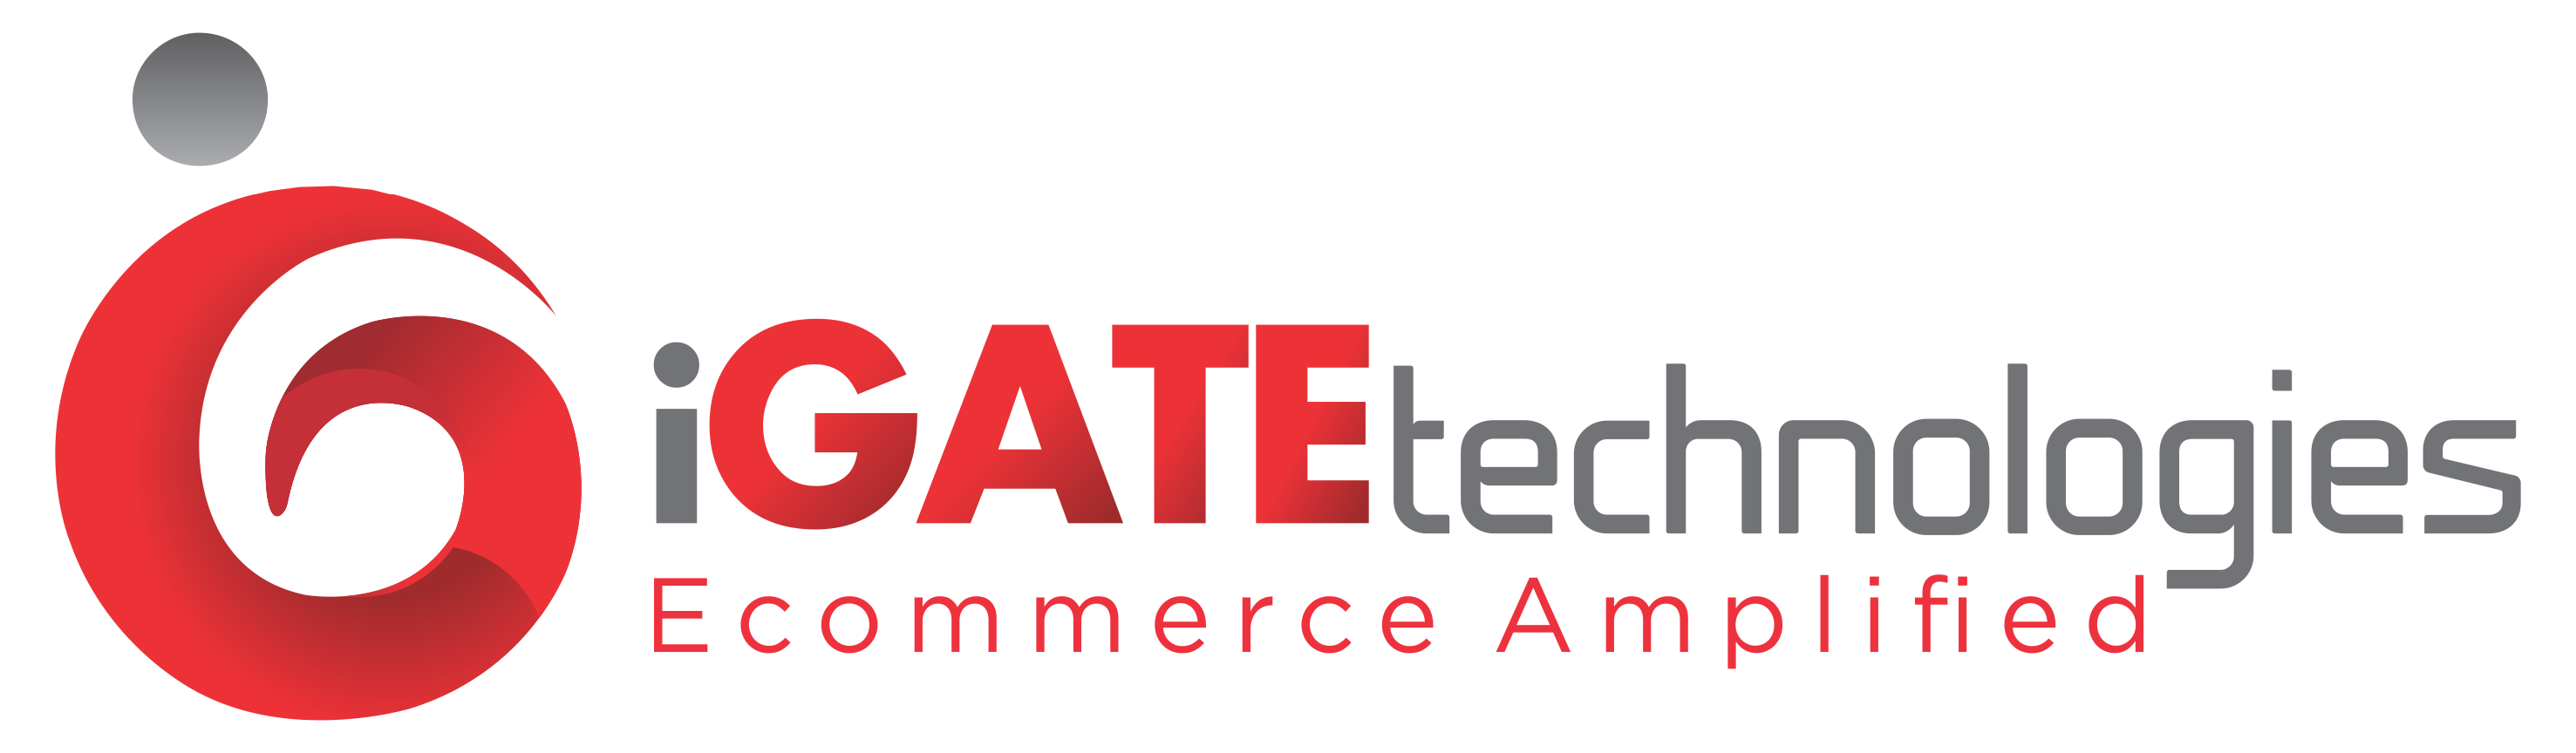 IGate Technologies Logo